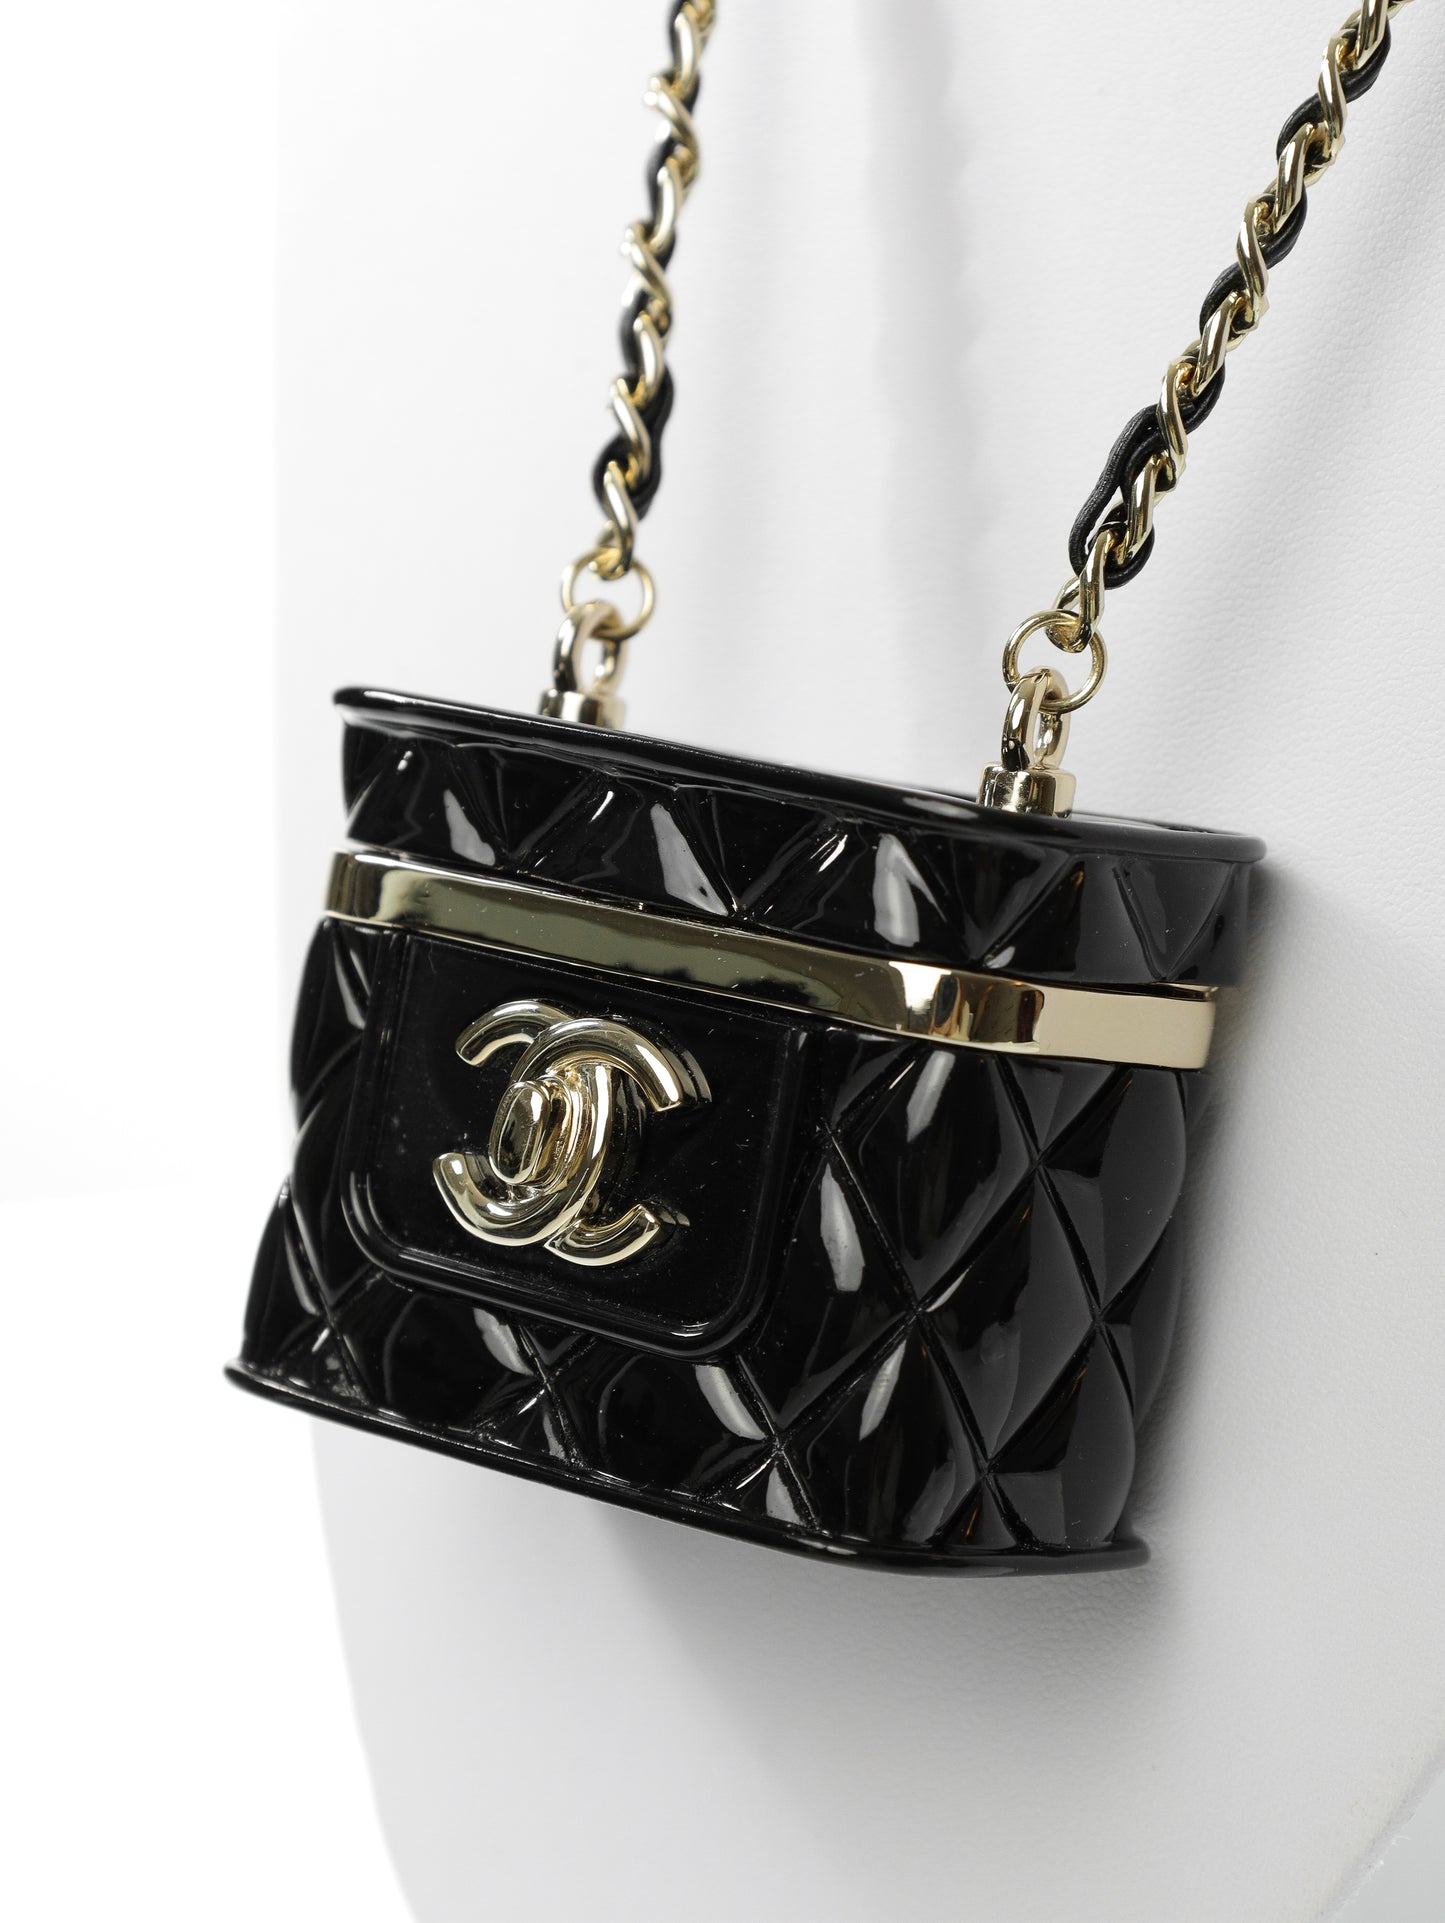 CHANEL necklace chain with handbag pendant vanity bag